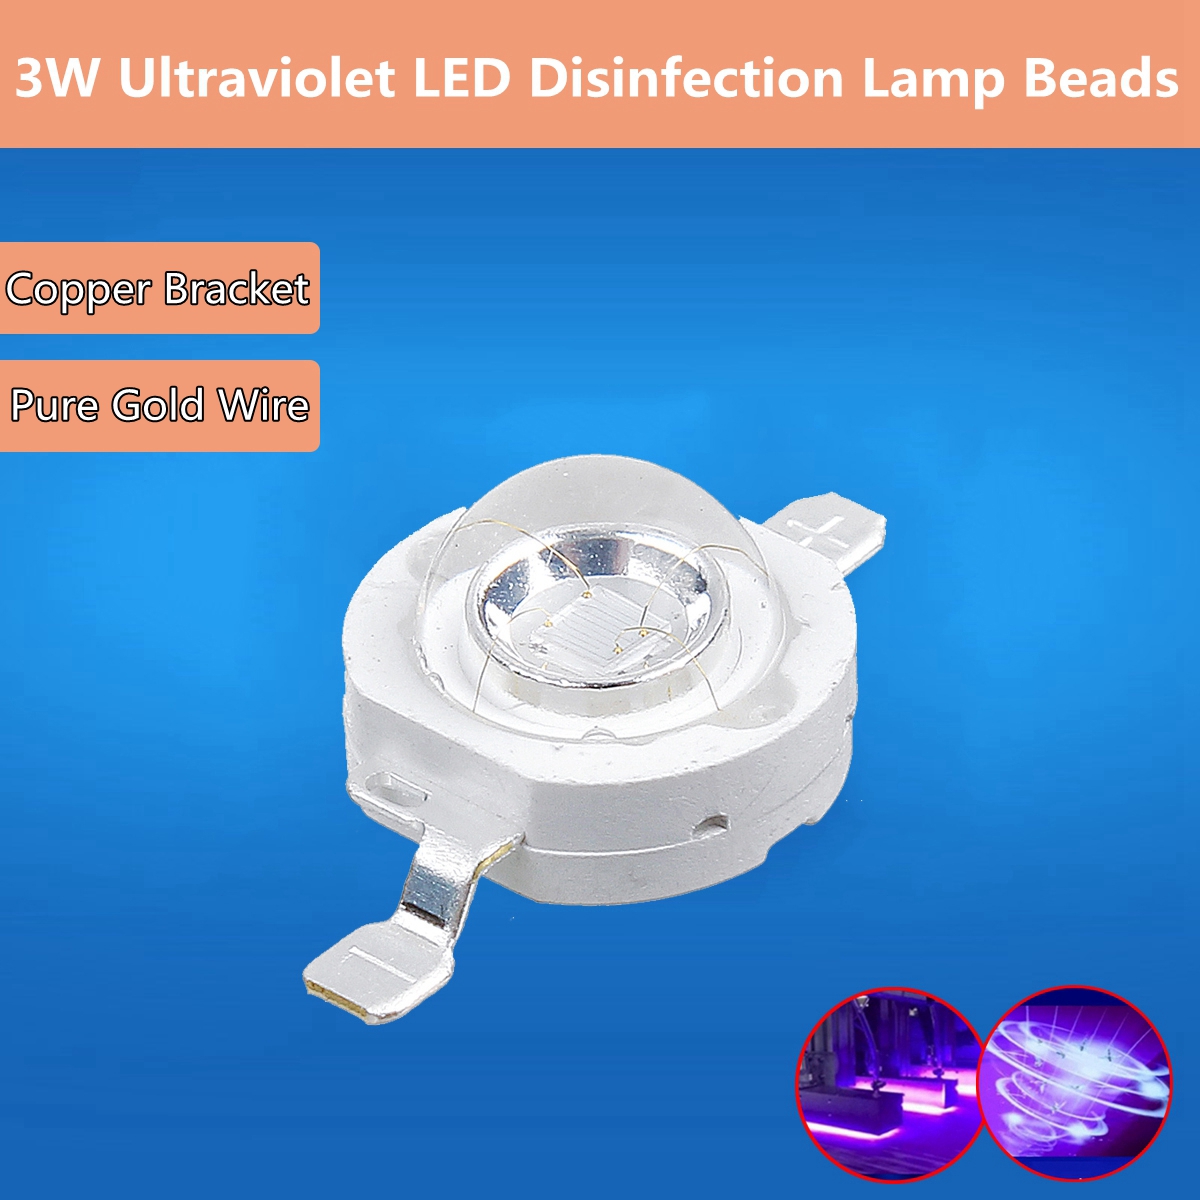 3W-High-Power-Vertical-Lamp-Beads-LED-Disinfecting-High-brightness-1694687-2